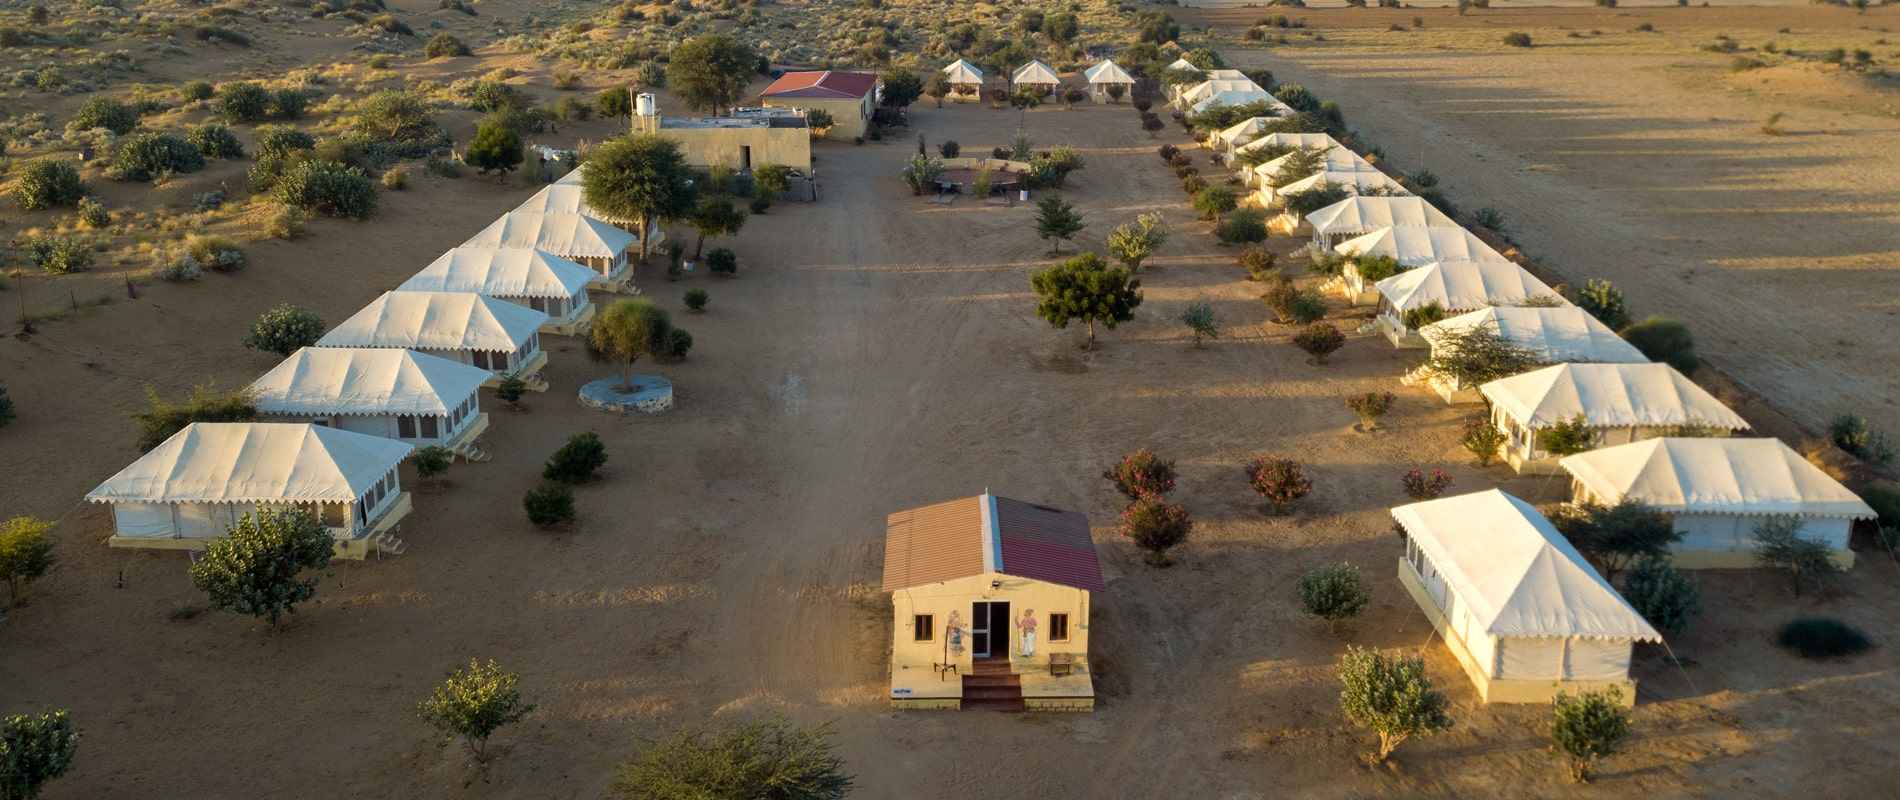 jaisalmer desert camp